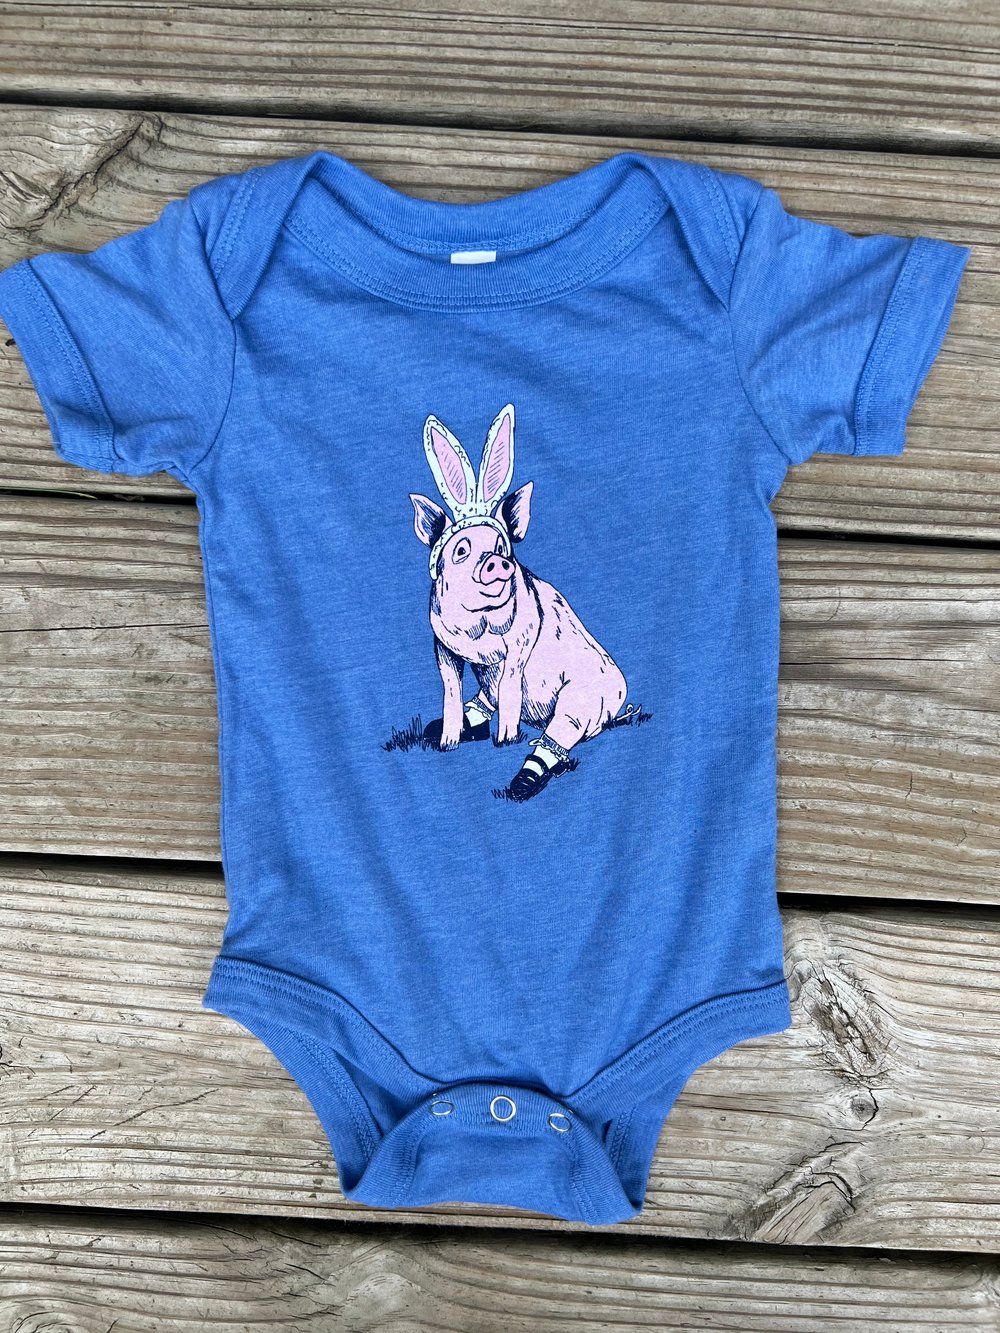 Image of Baby Pig Bunny Onesie in blue 